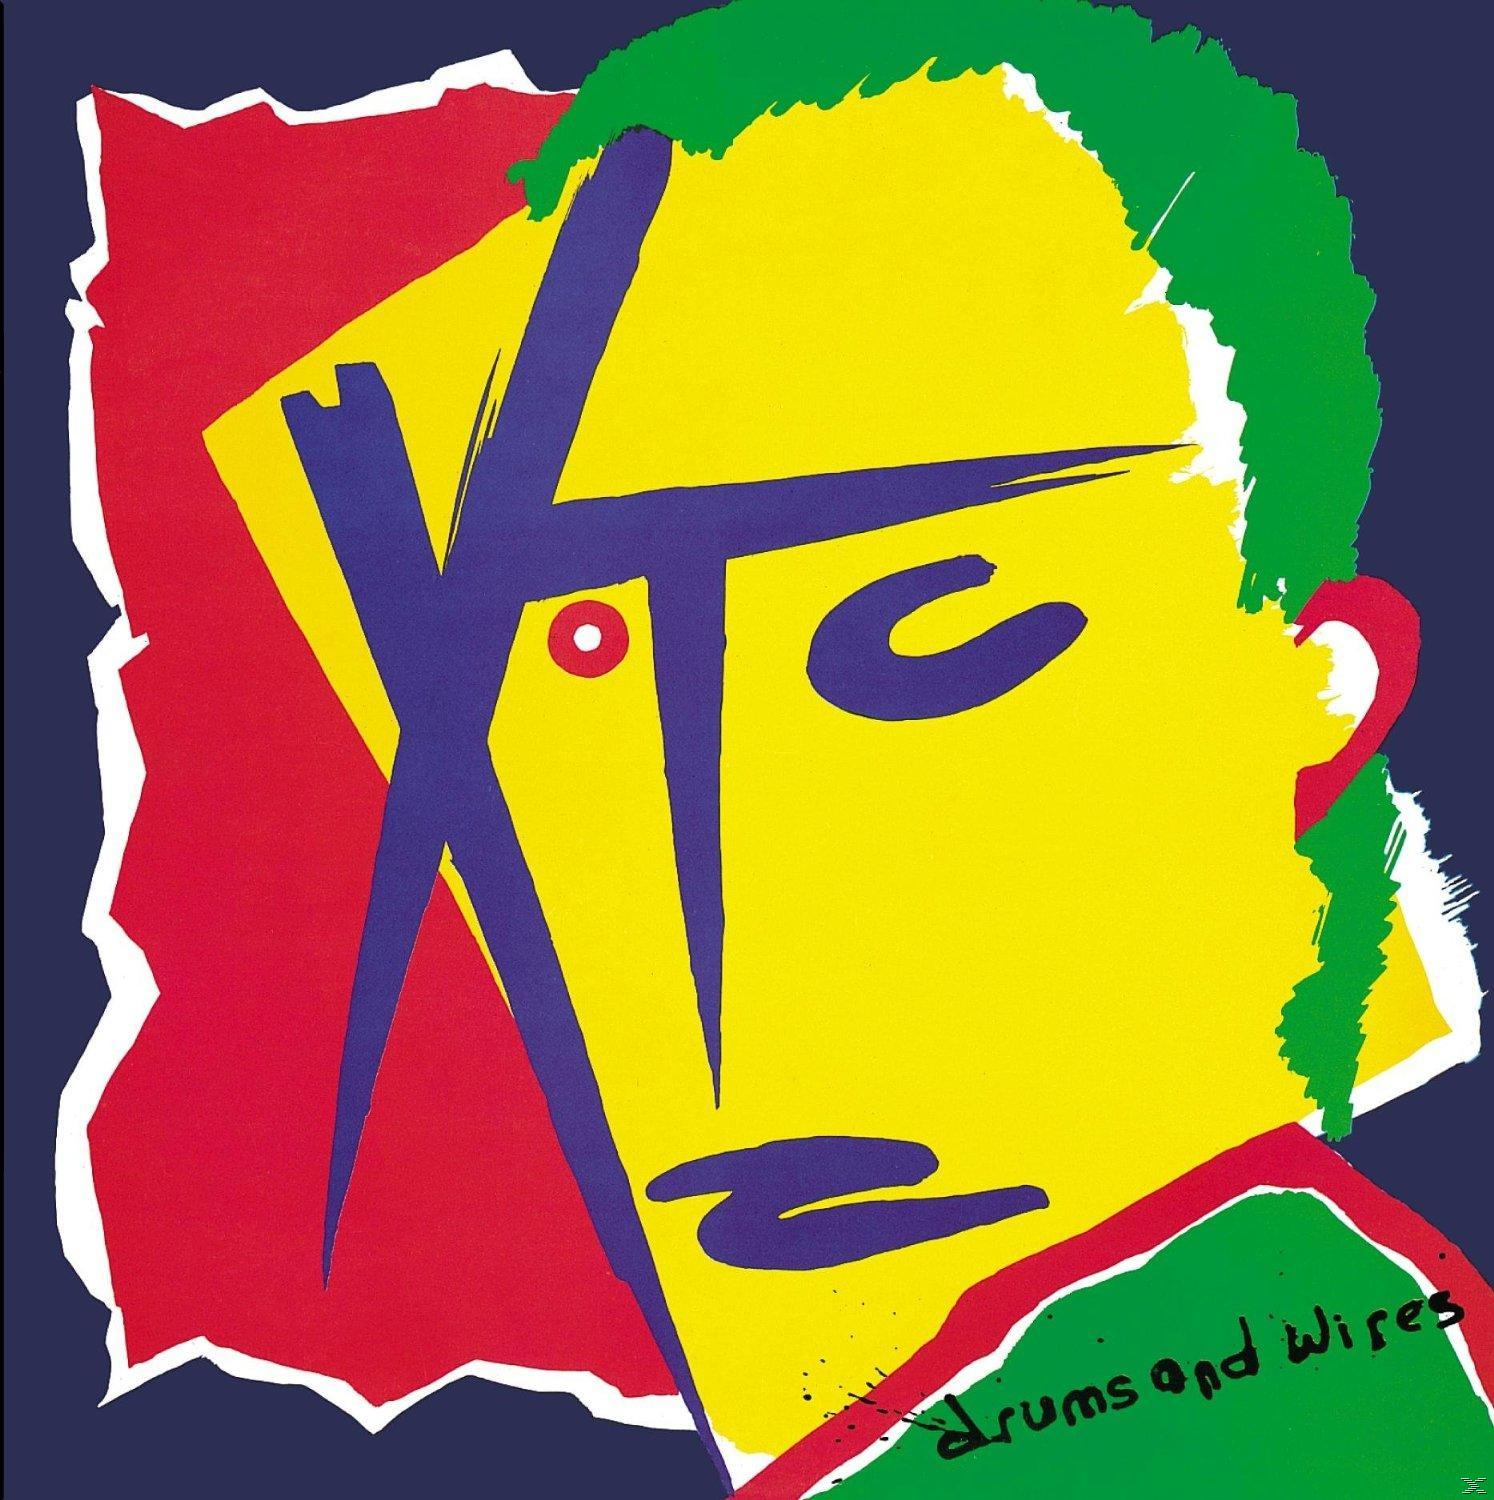 Xtc - Drums (CD + & Audio) - Wires DVD